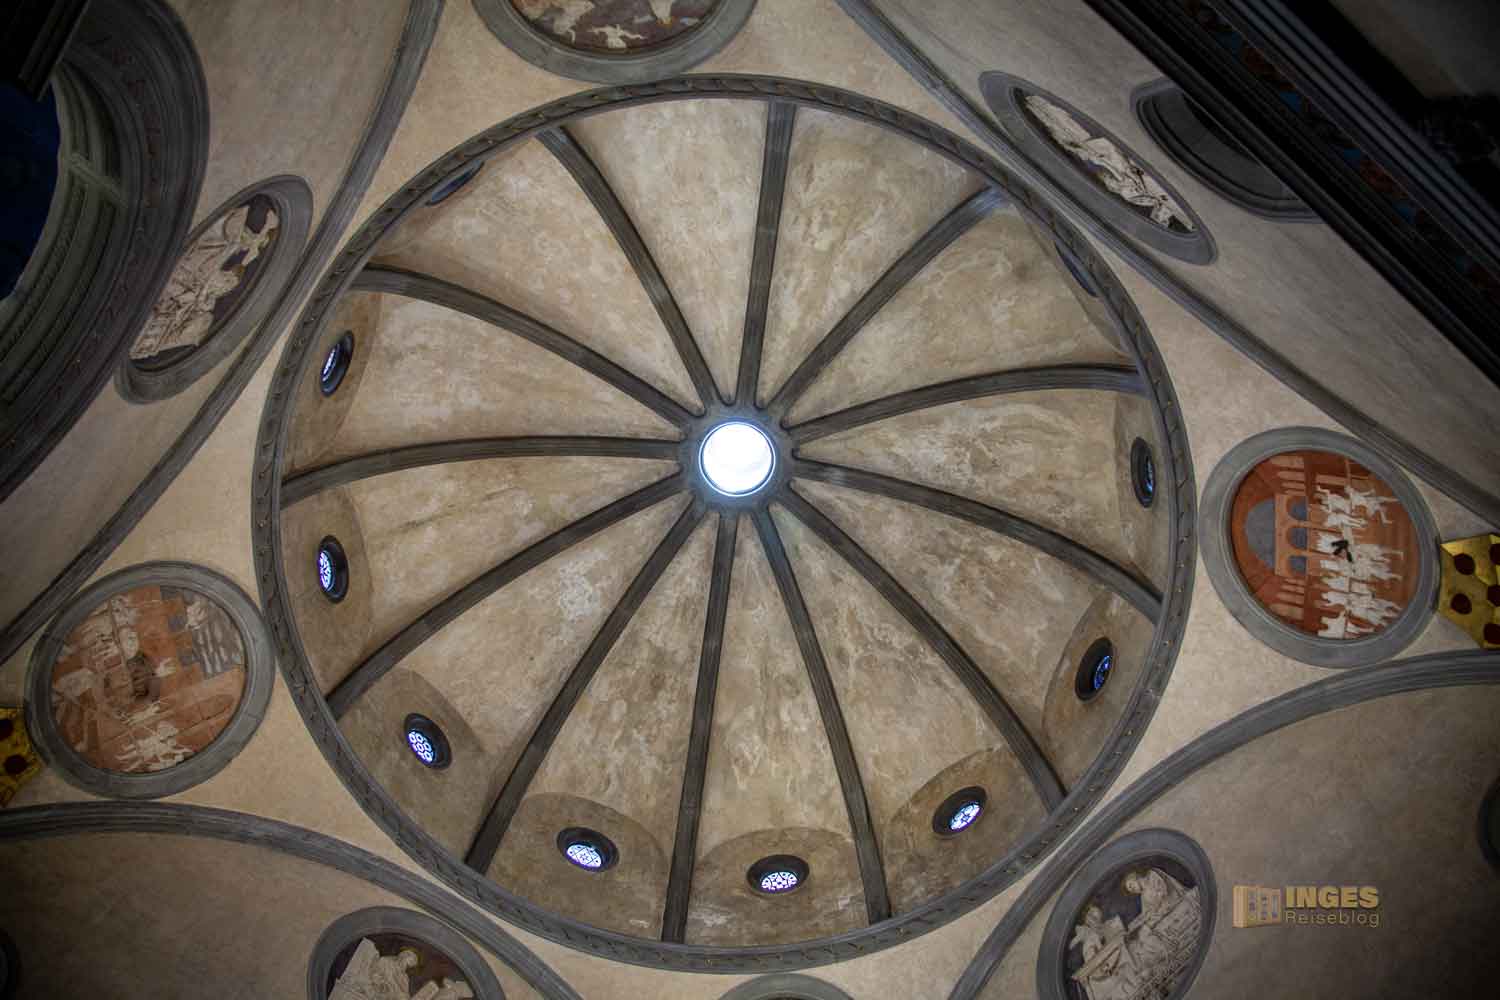 kuppel alte sakristei basilika san lorenzo florenz 0057